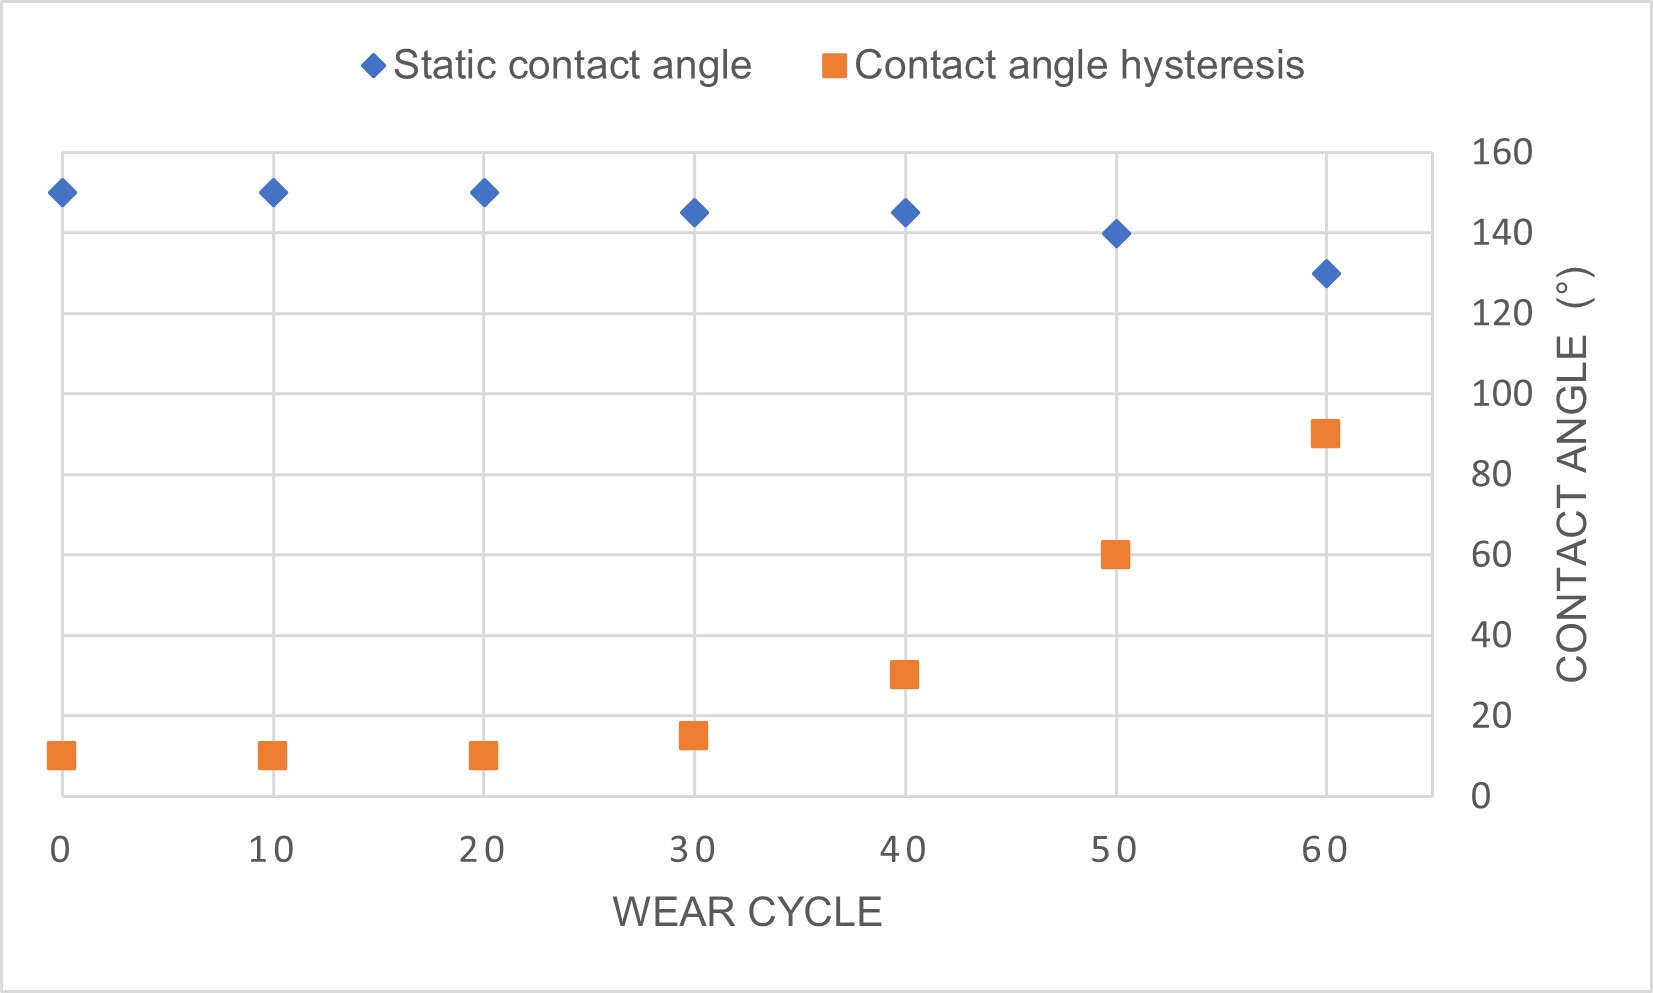 Contact angle hysteresis vs. wear